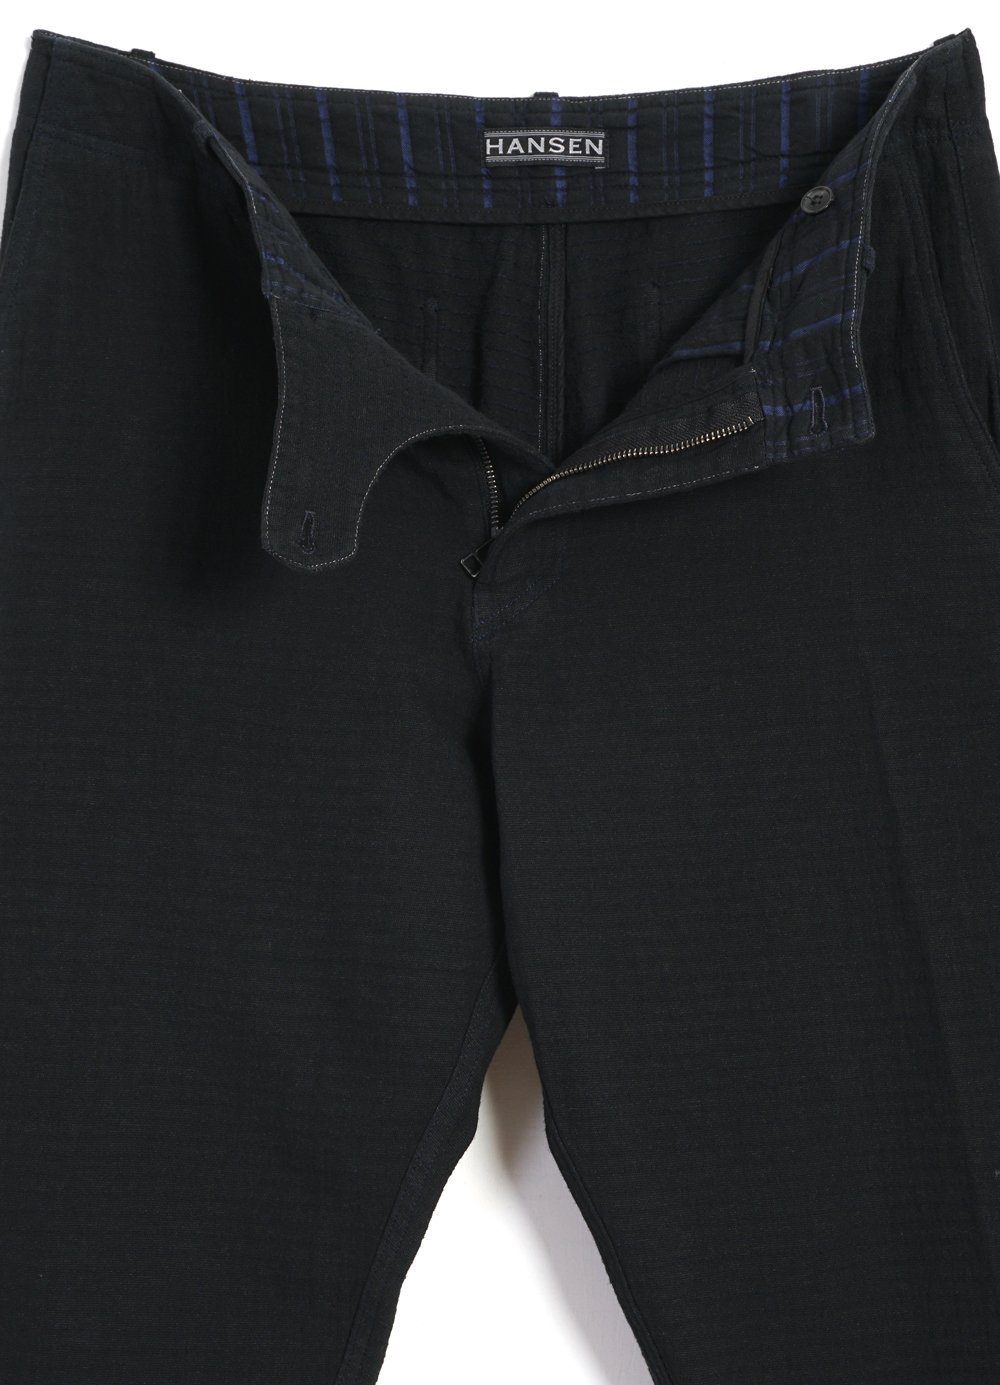 HANSEN GARMENTS - TRYGVE | Wide Cut Cropped Trousers | Black - HANSEN Garments